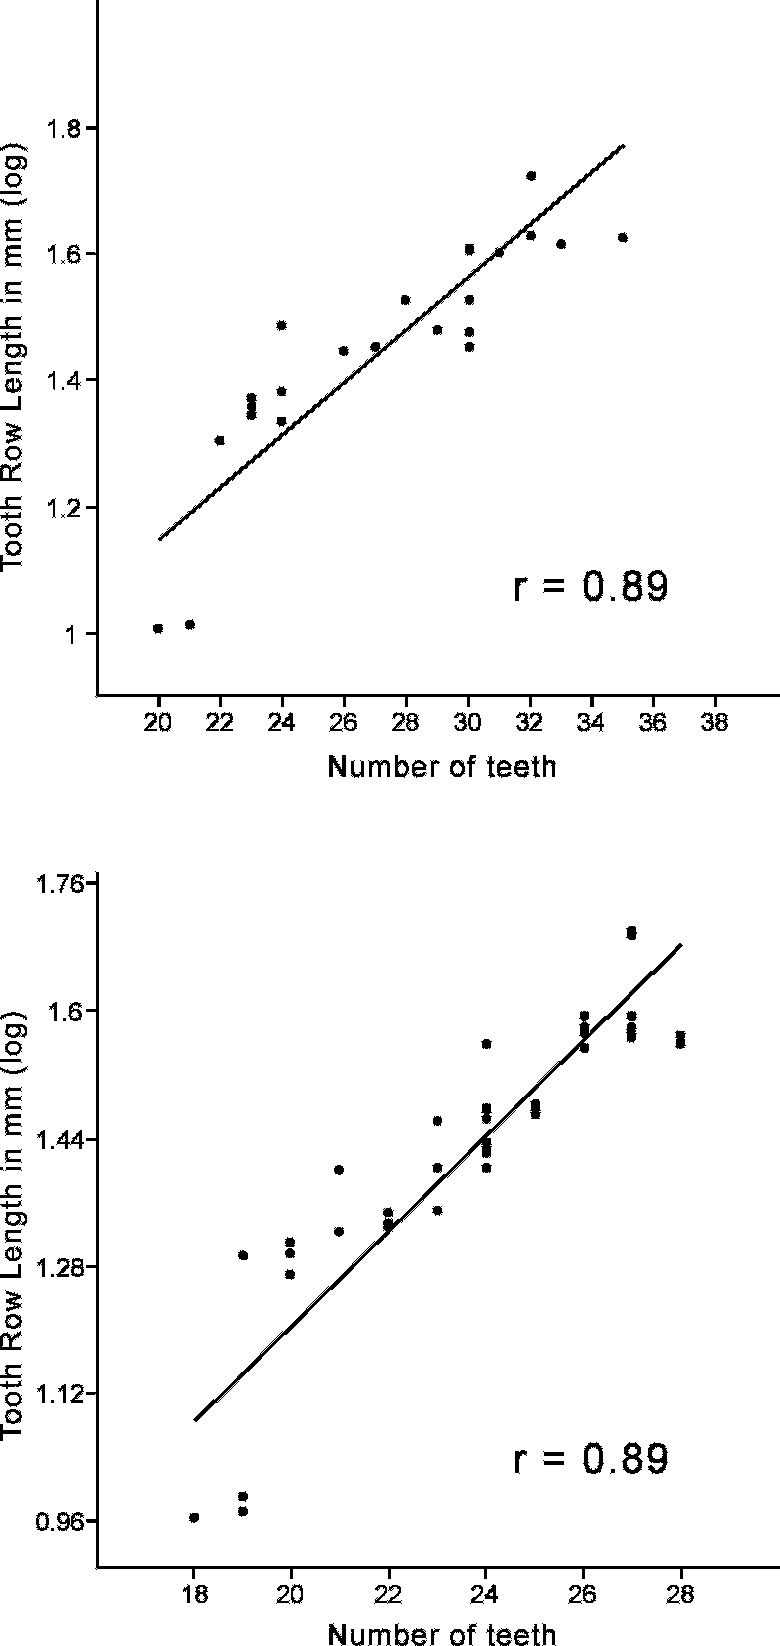 Teeth Diagram Numbers Regression Plots Of Mandibular Top And Maxillary Bottom Tooth